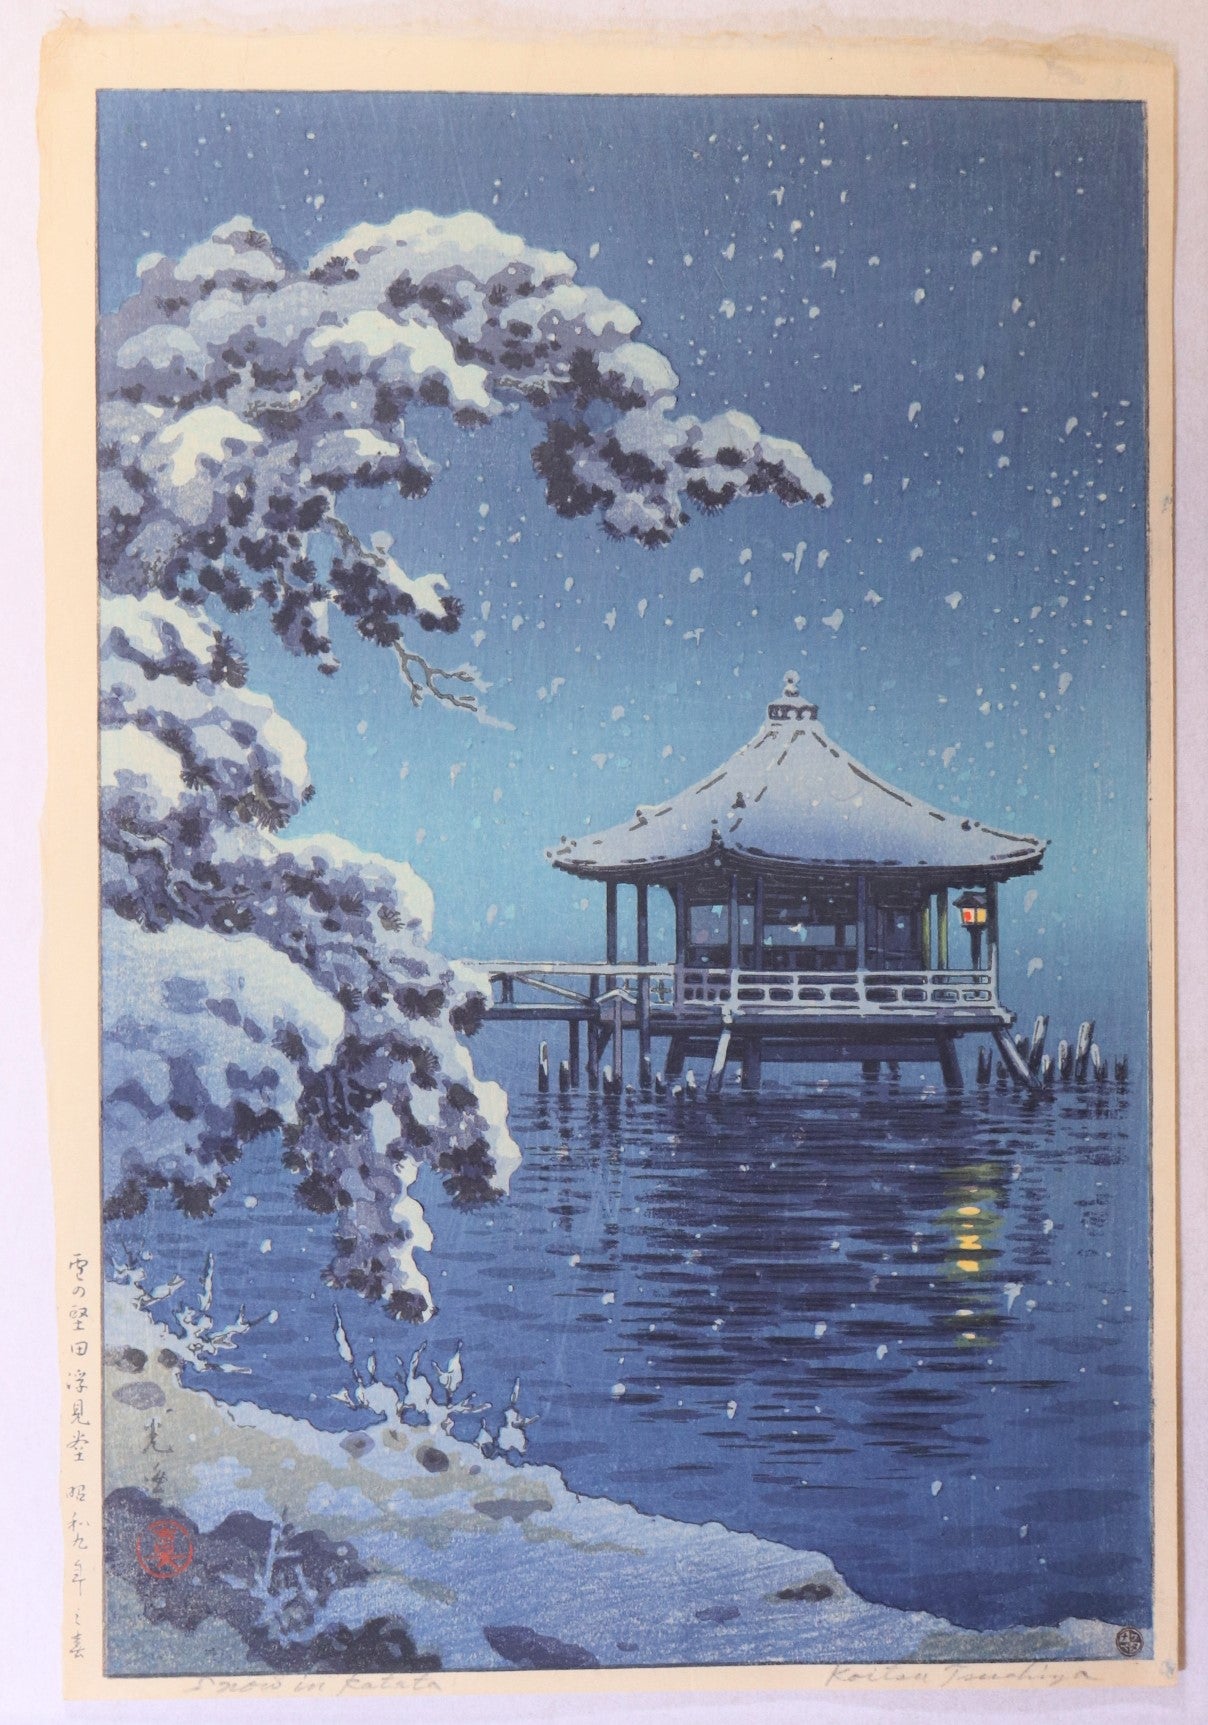 Snow at Ukimido Temple Hall in the water of Lake Biwa by Tsuchiya Koitsu / Neige sur le pavillon Ukimido dans les eaux du lac Biwa par Tsuchiya Koitsu